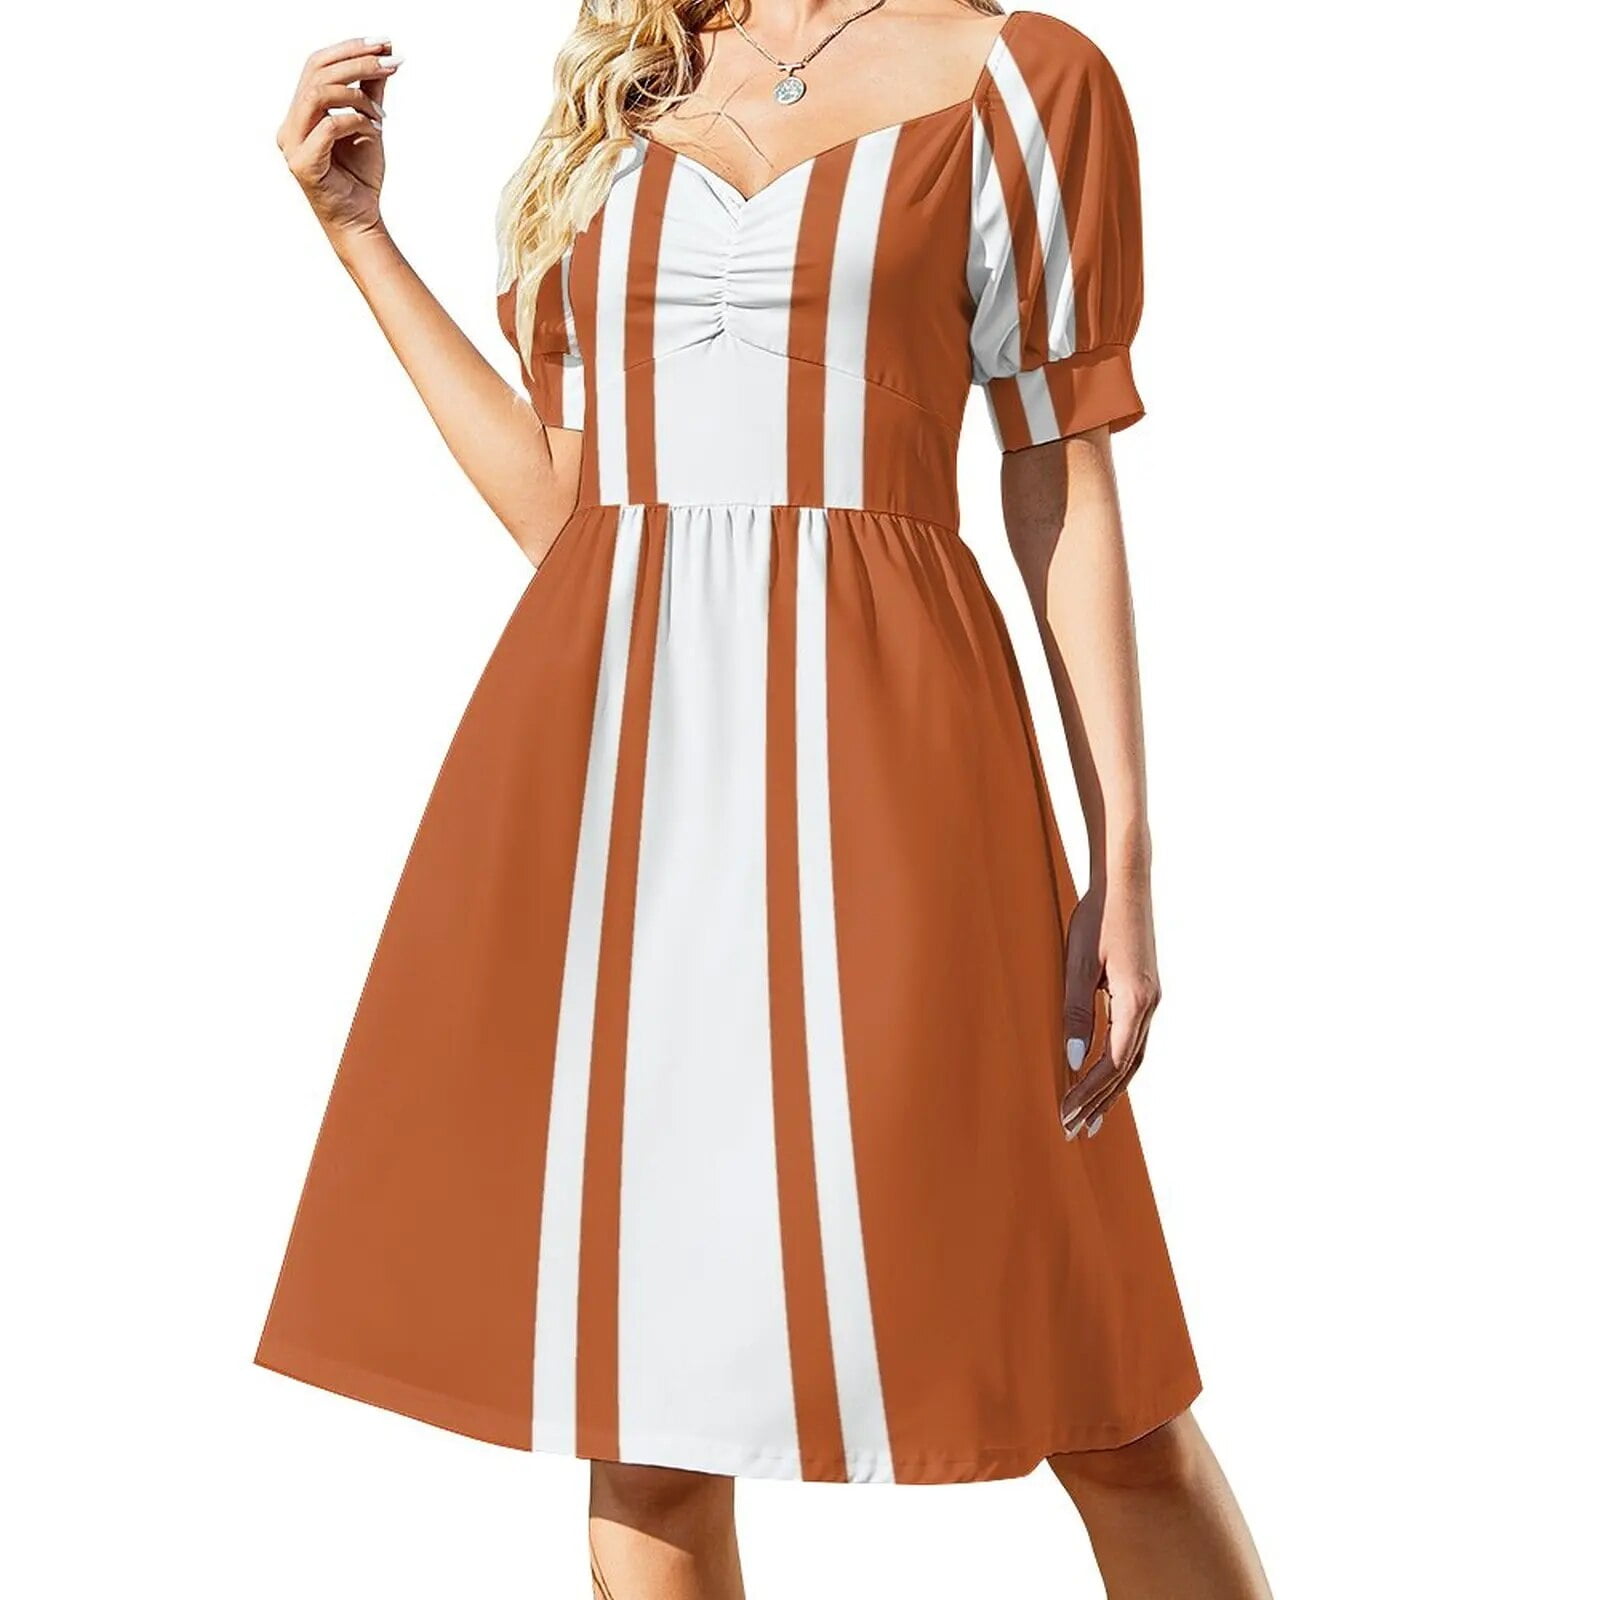 Burnt Orange & White Vertical Power Stripe Dress clothes for woman ...